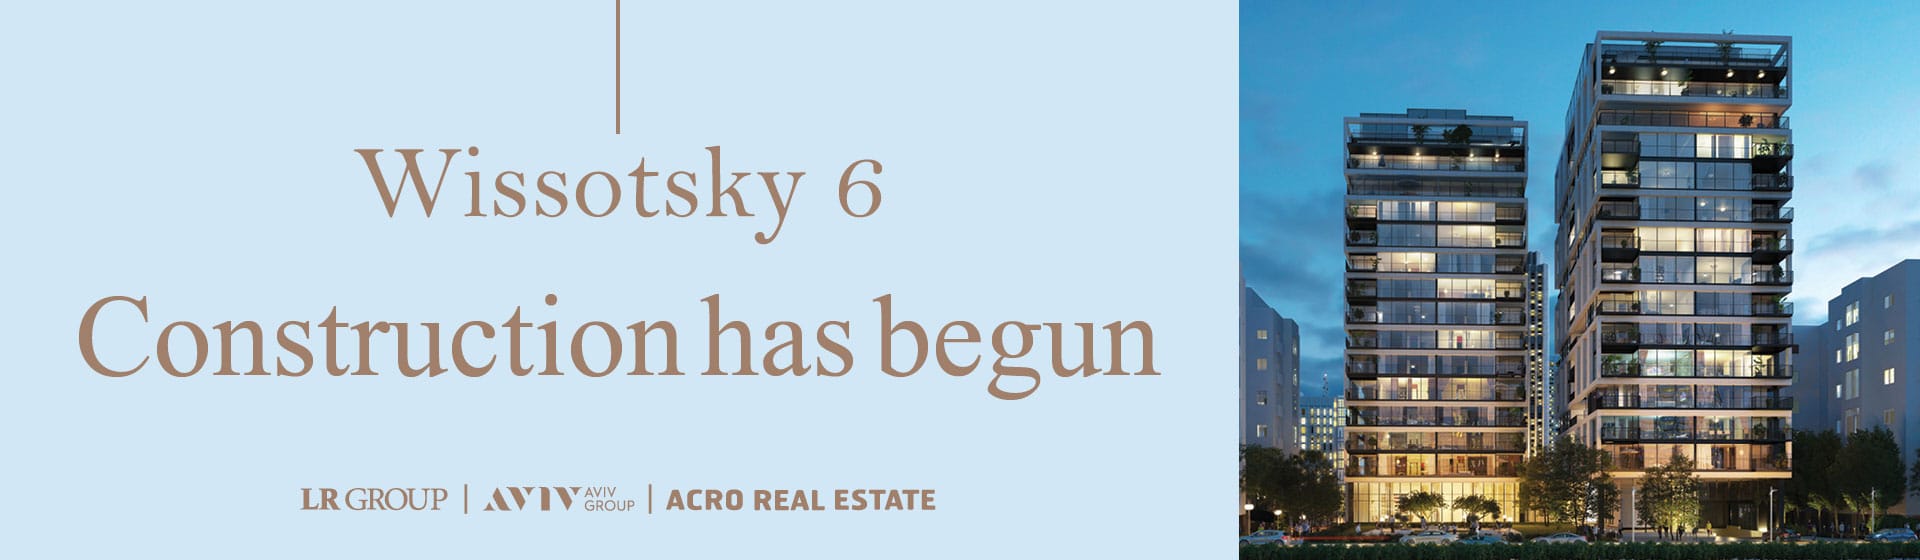 wissotsky6 construction has begun - logo acro real estate, logo aviv group, logo LR group